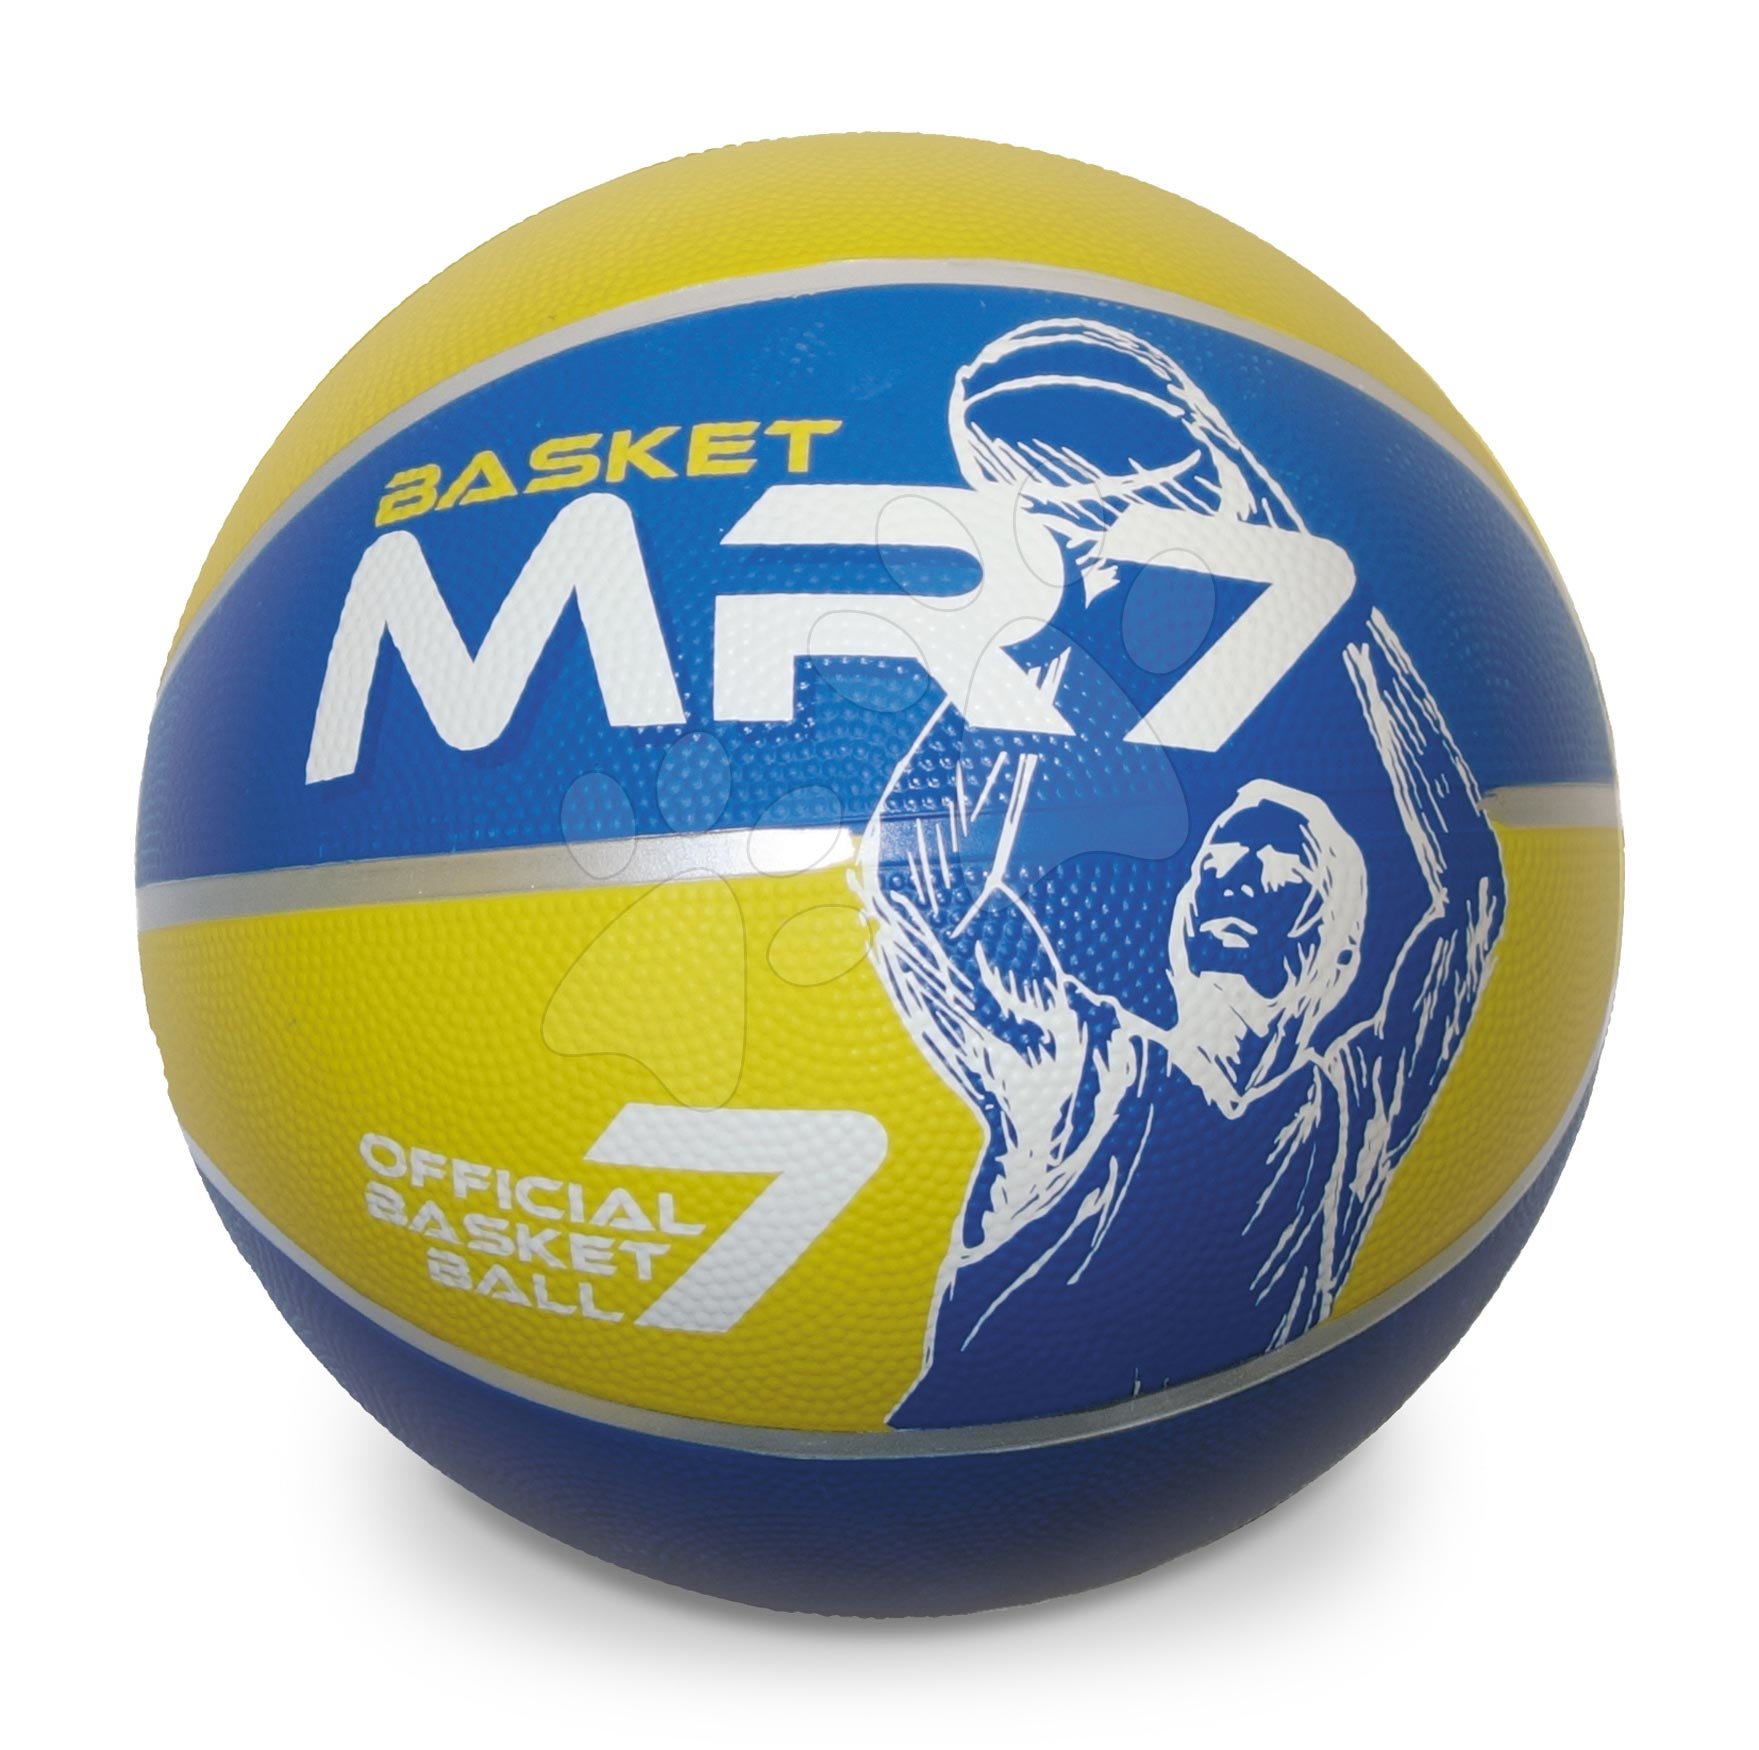 Sportlabdák - Kosárlabda Basket MR7 Mondo mérete 7 súlya 600 g